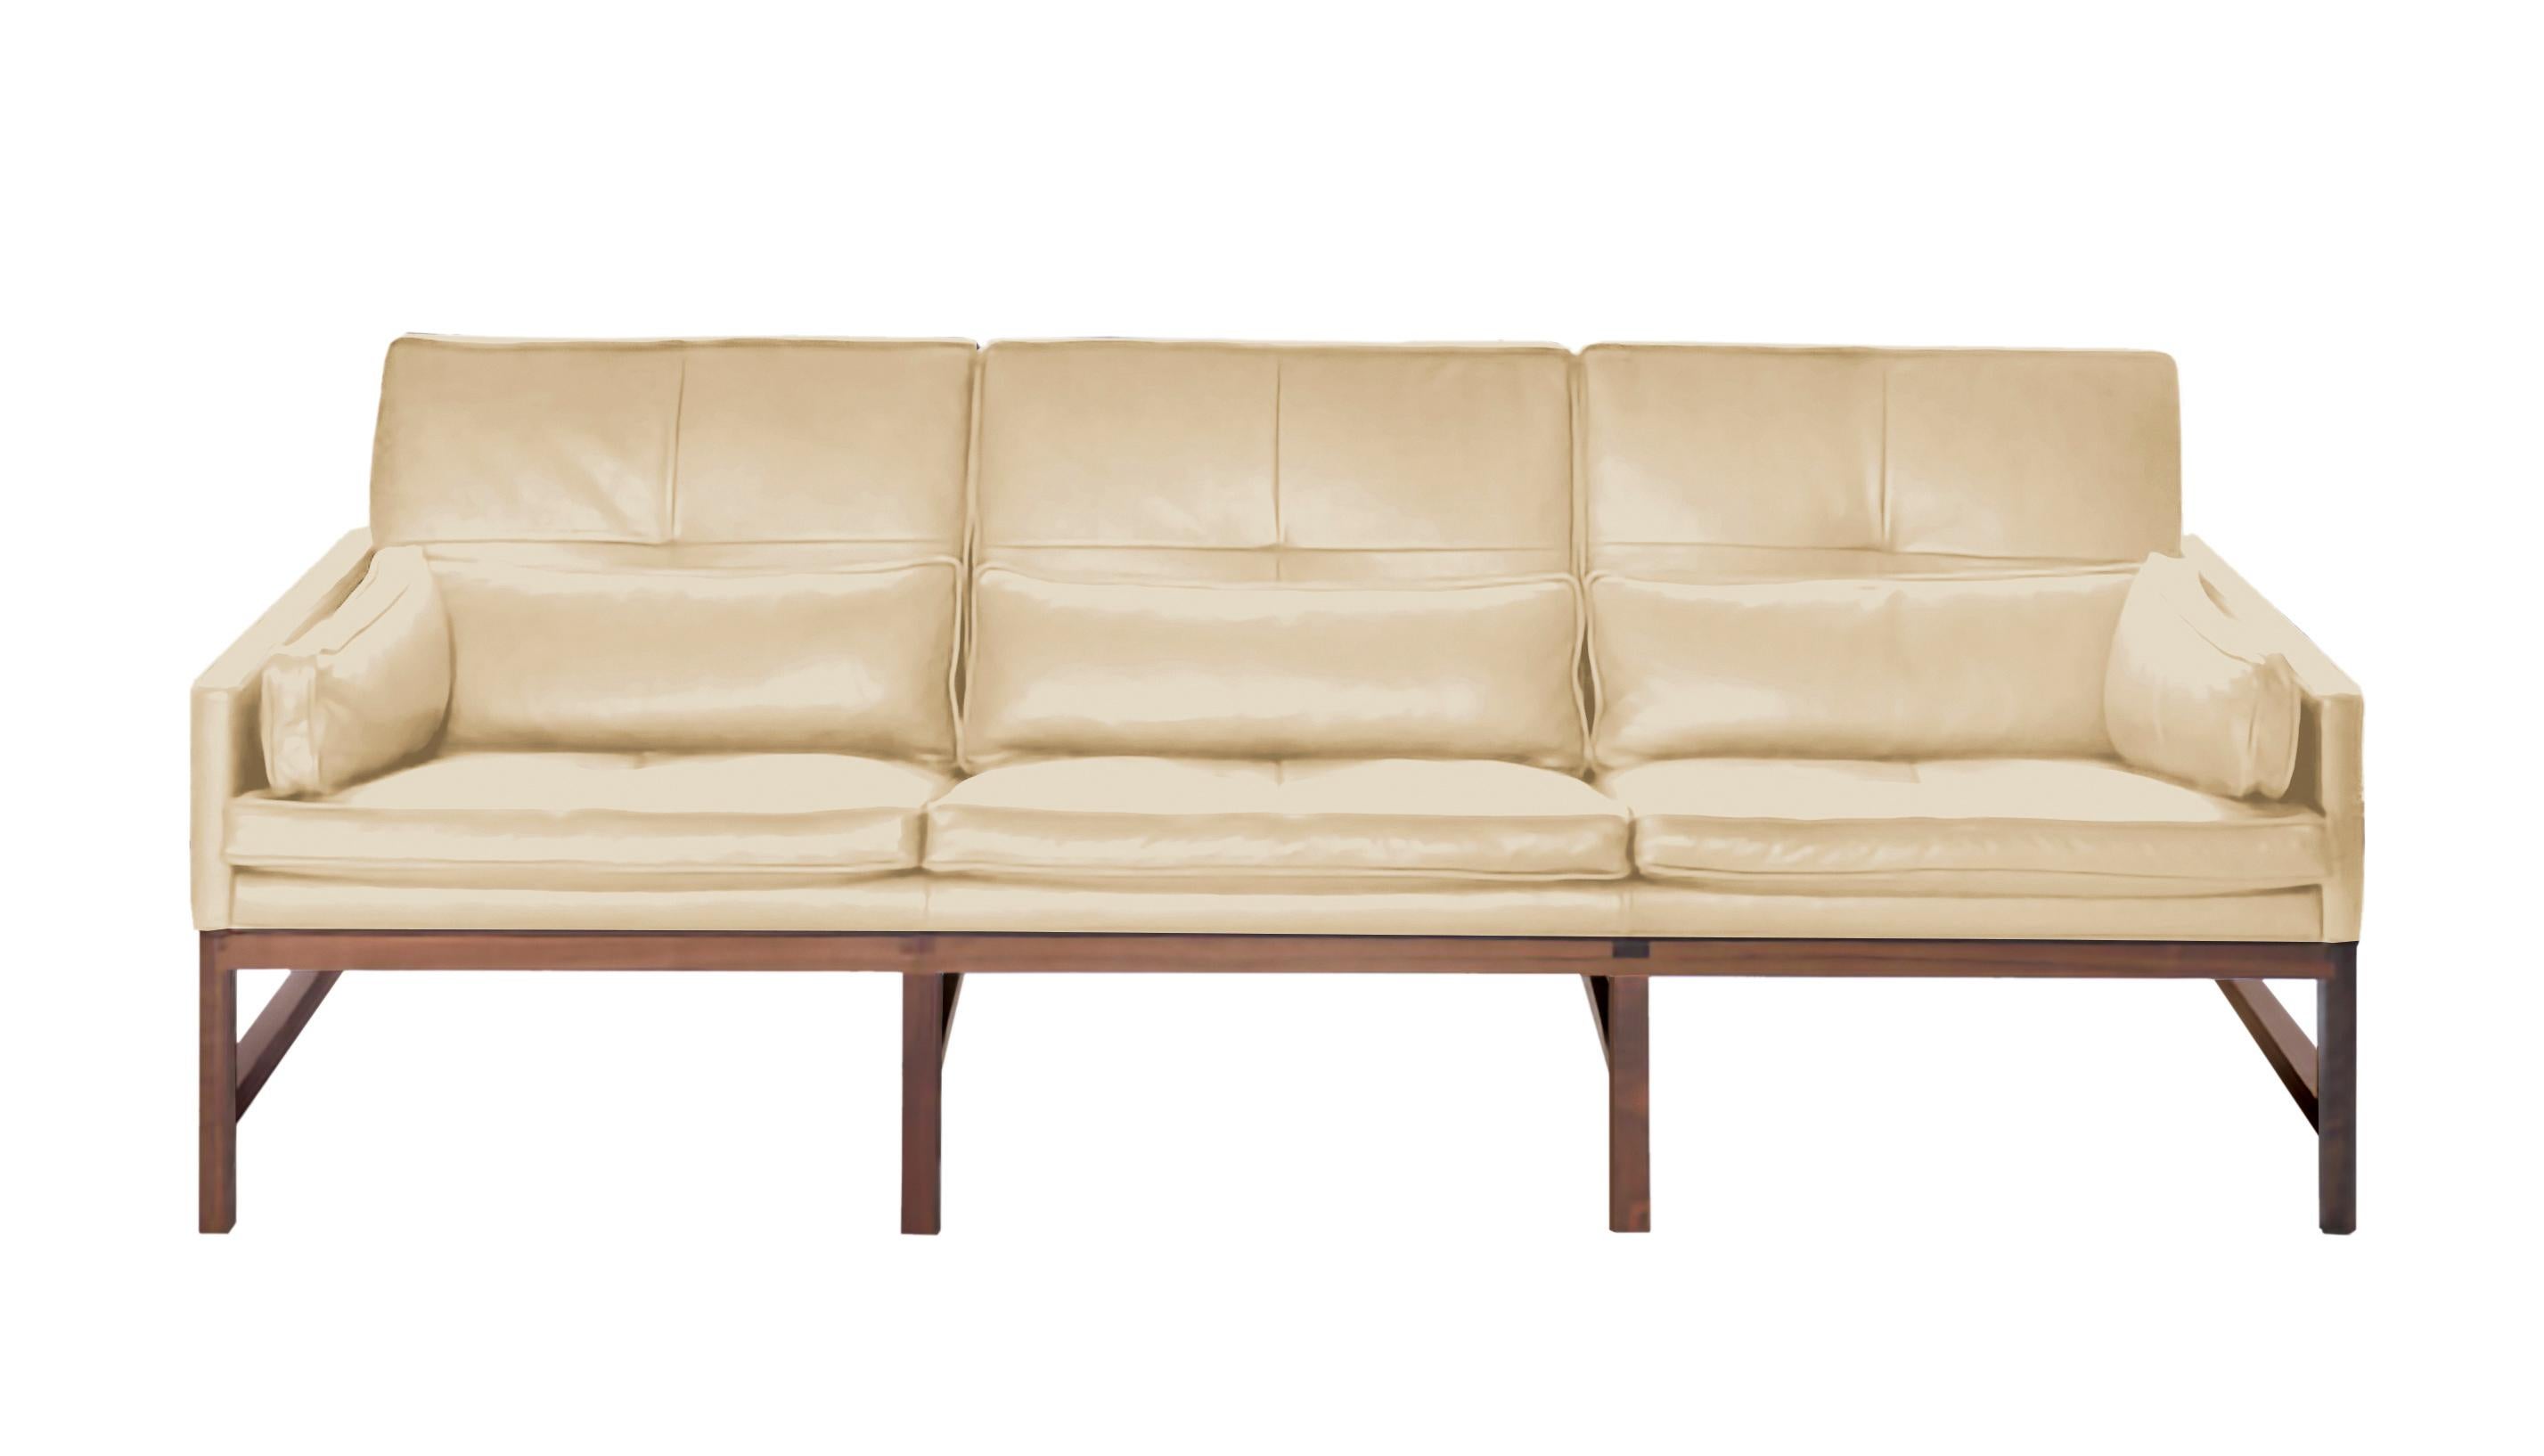 For Sale: Beige (Comfort 02067 Beige) Wood Frame Low Back Sofa in Walnut and Leather Designed by Craig Bassam